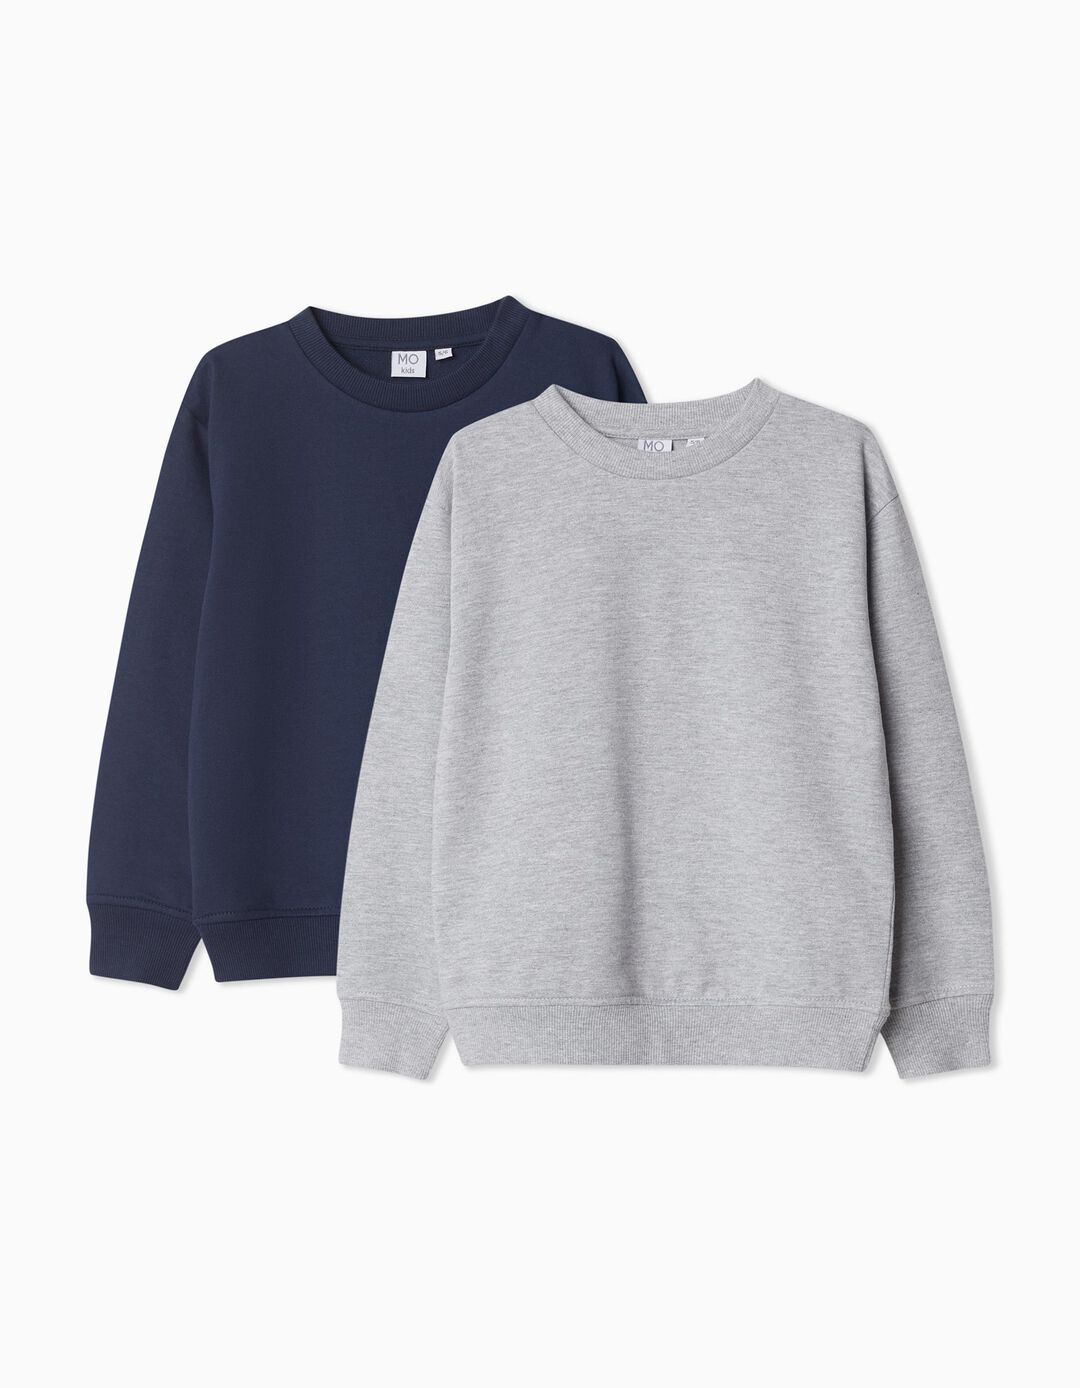 Pack 2 Fleece Sweatshirts, Boys, Light Grey/Dark Blue